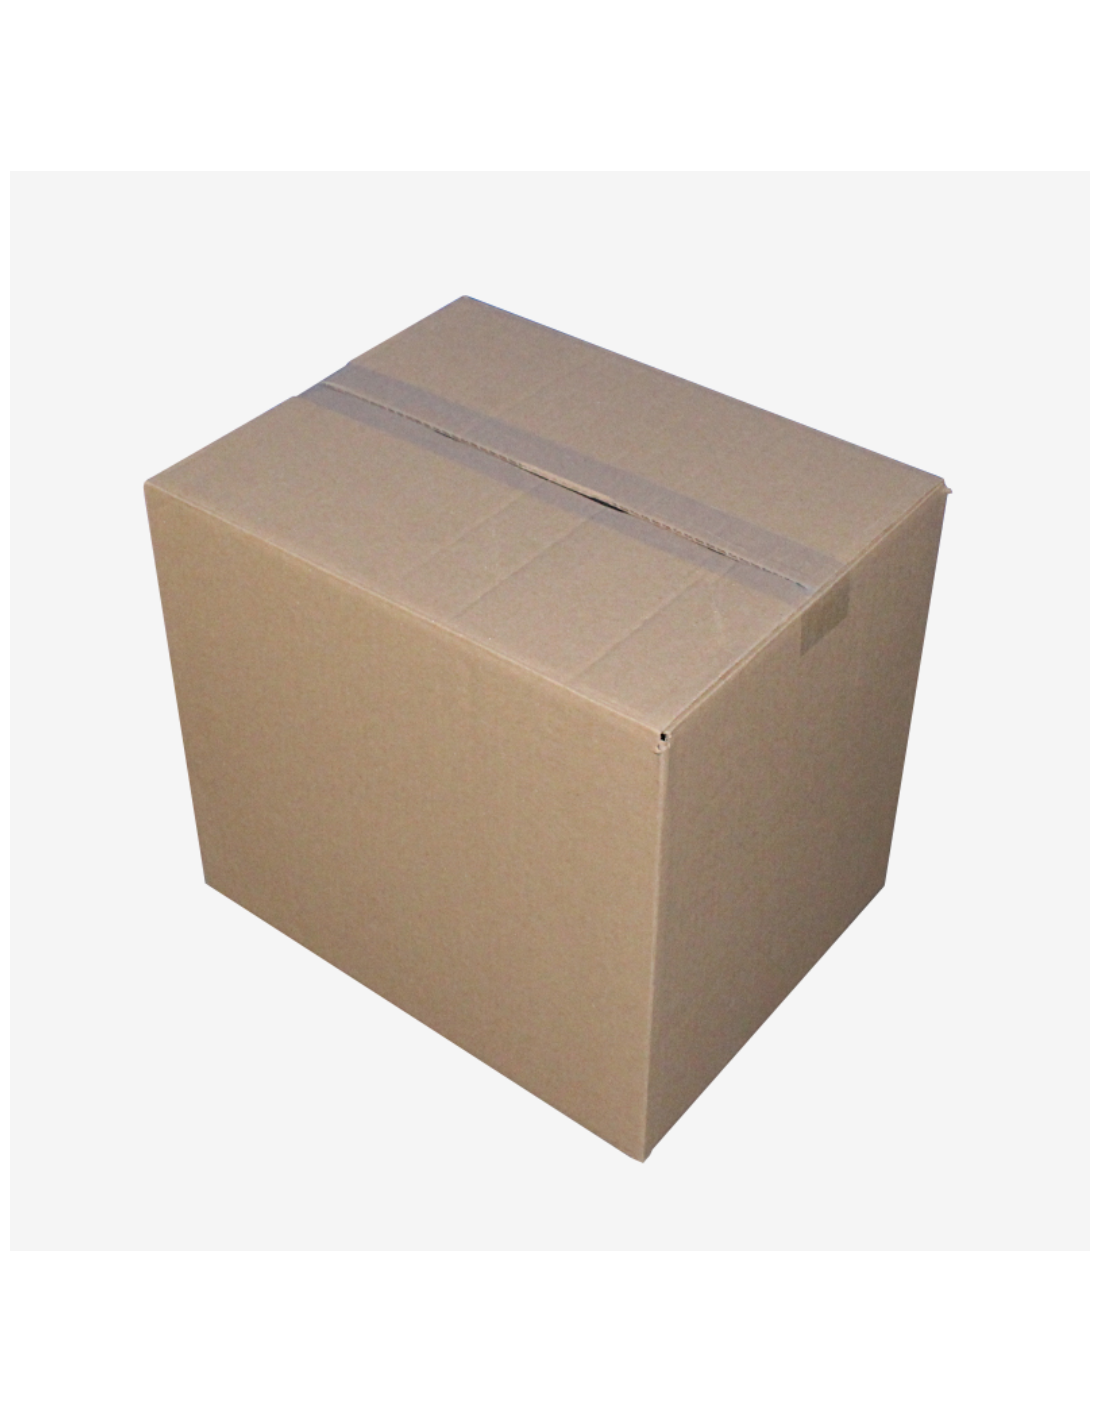 Lot cartons déménagement taille S x10 - Cartons de déménagement